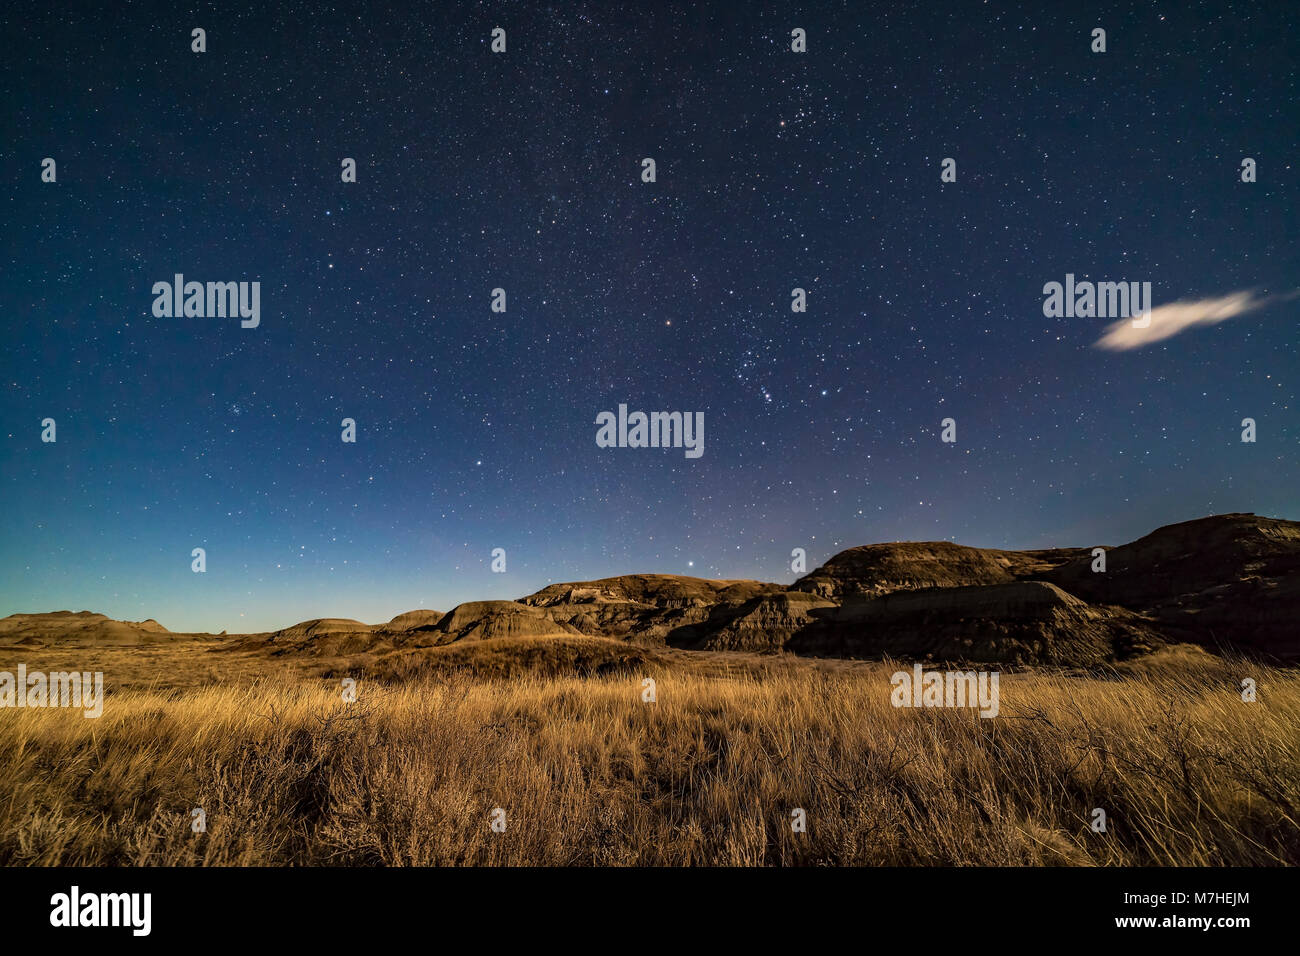 The winter stars rising over the moonlit sagebrush of Dinosaur Provincial Park, Alberta, Canada. Stock Photo